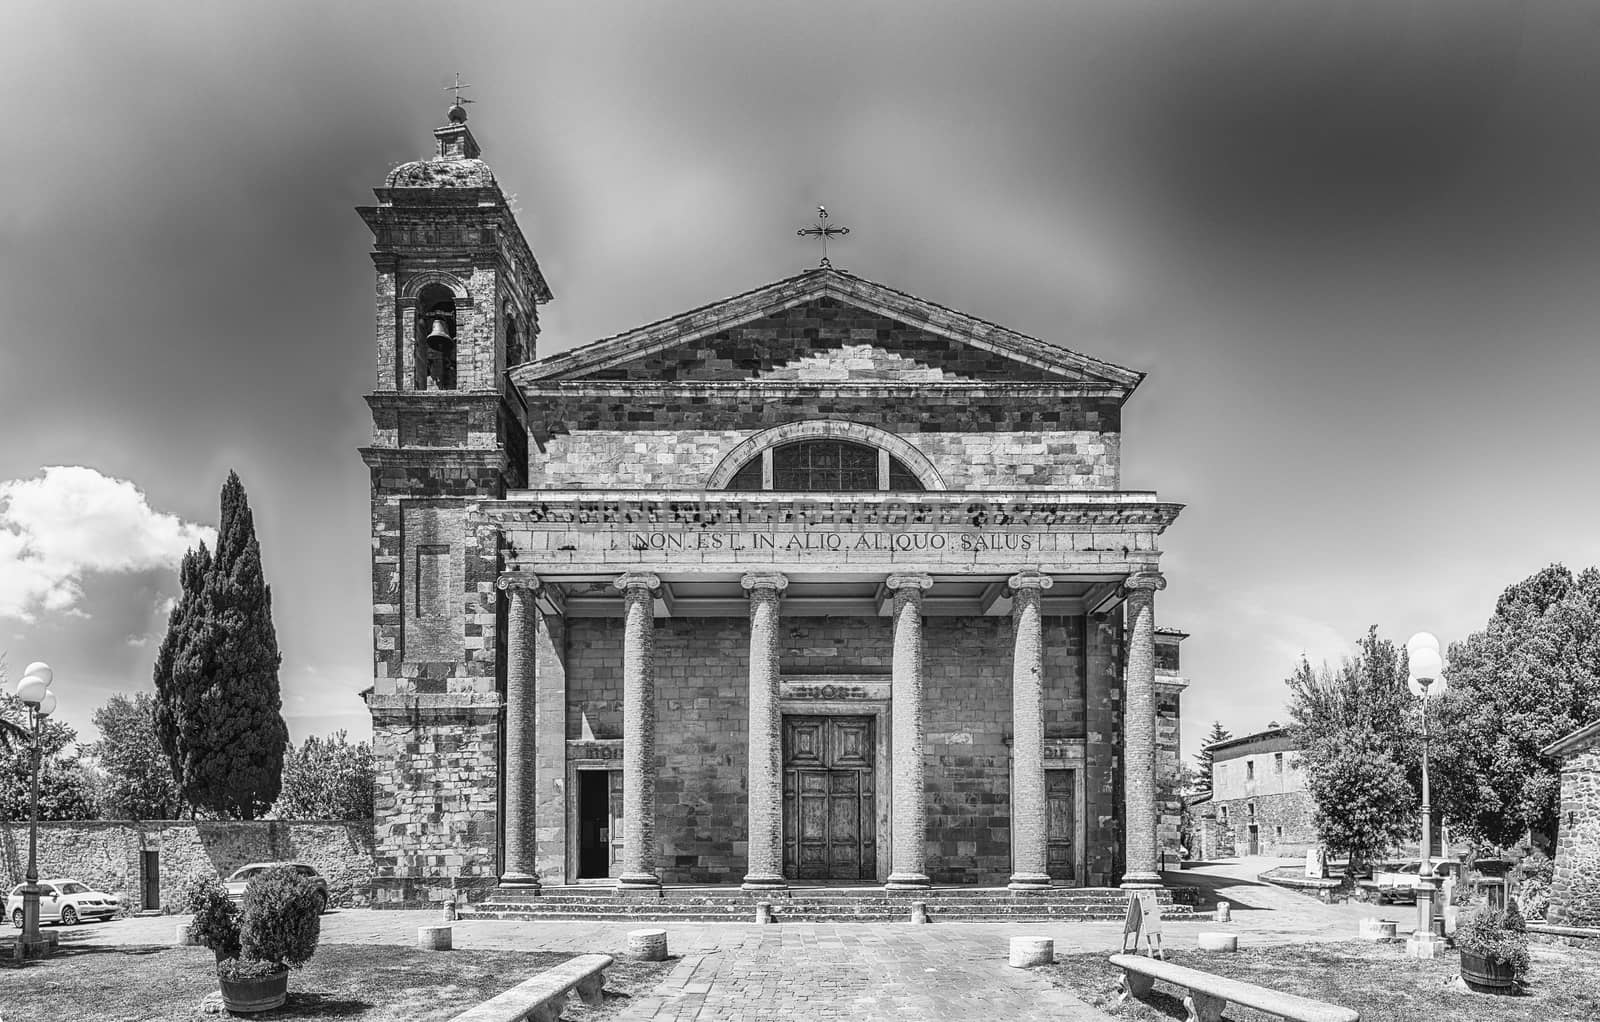 Facade of the Roman Catholic Cathedral of Montalcino, Italy by marcorubino